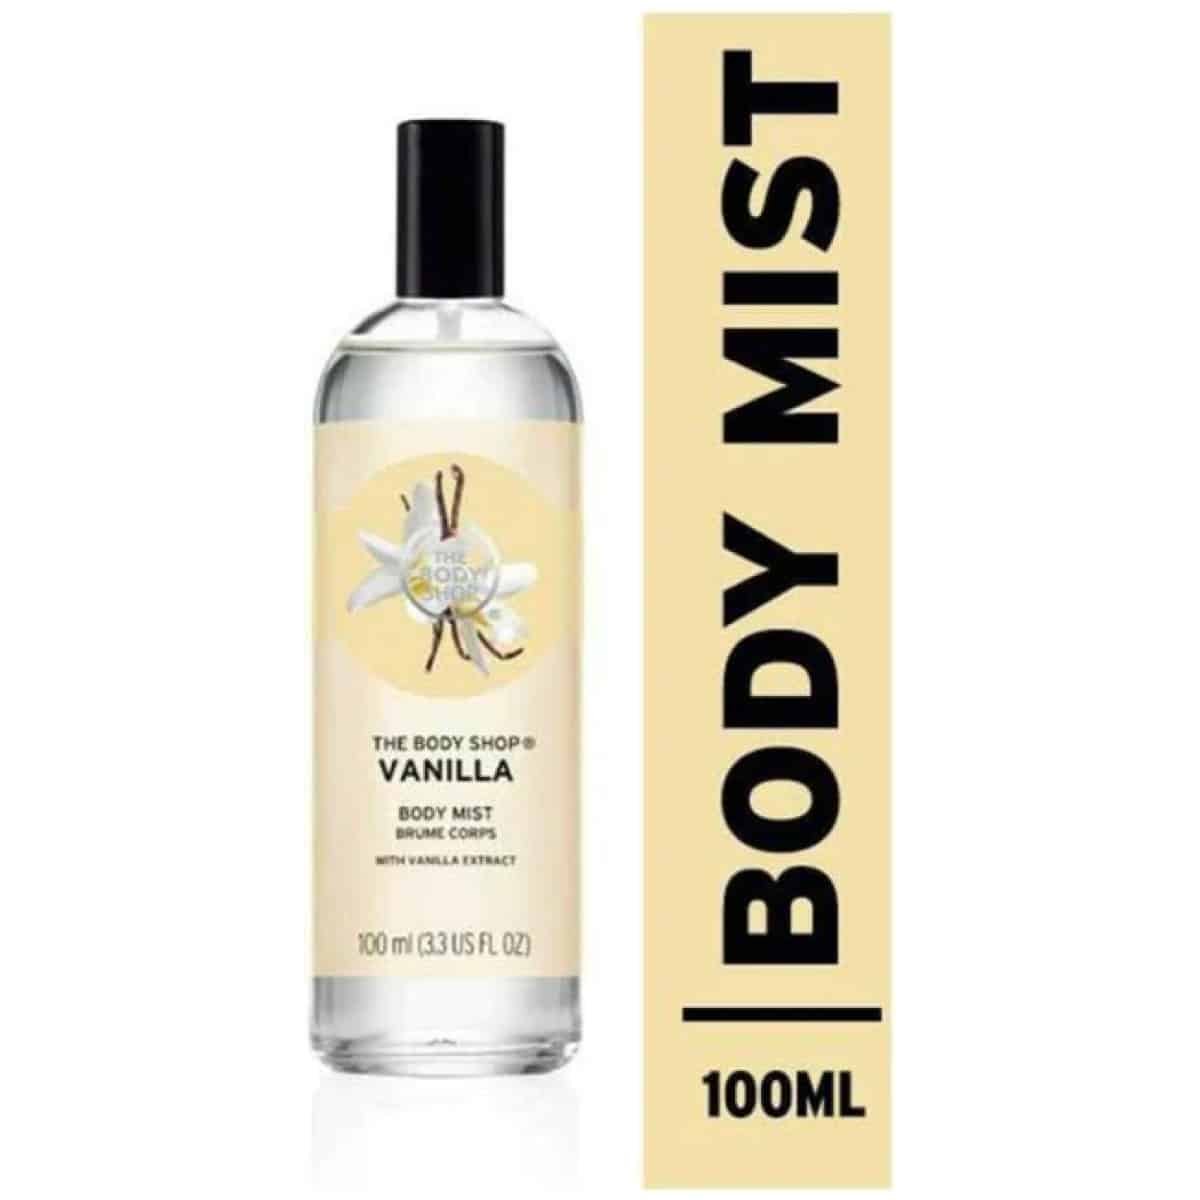 The Body Shop Vanilla Body Mist 100Ml